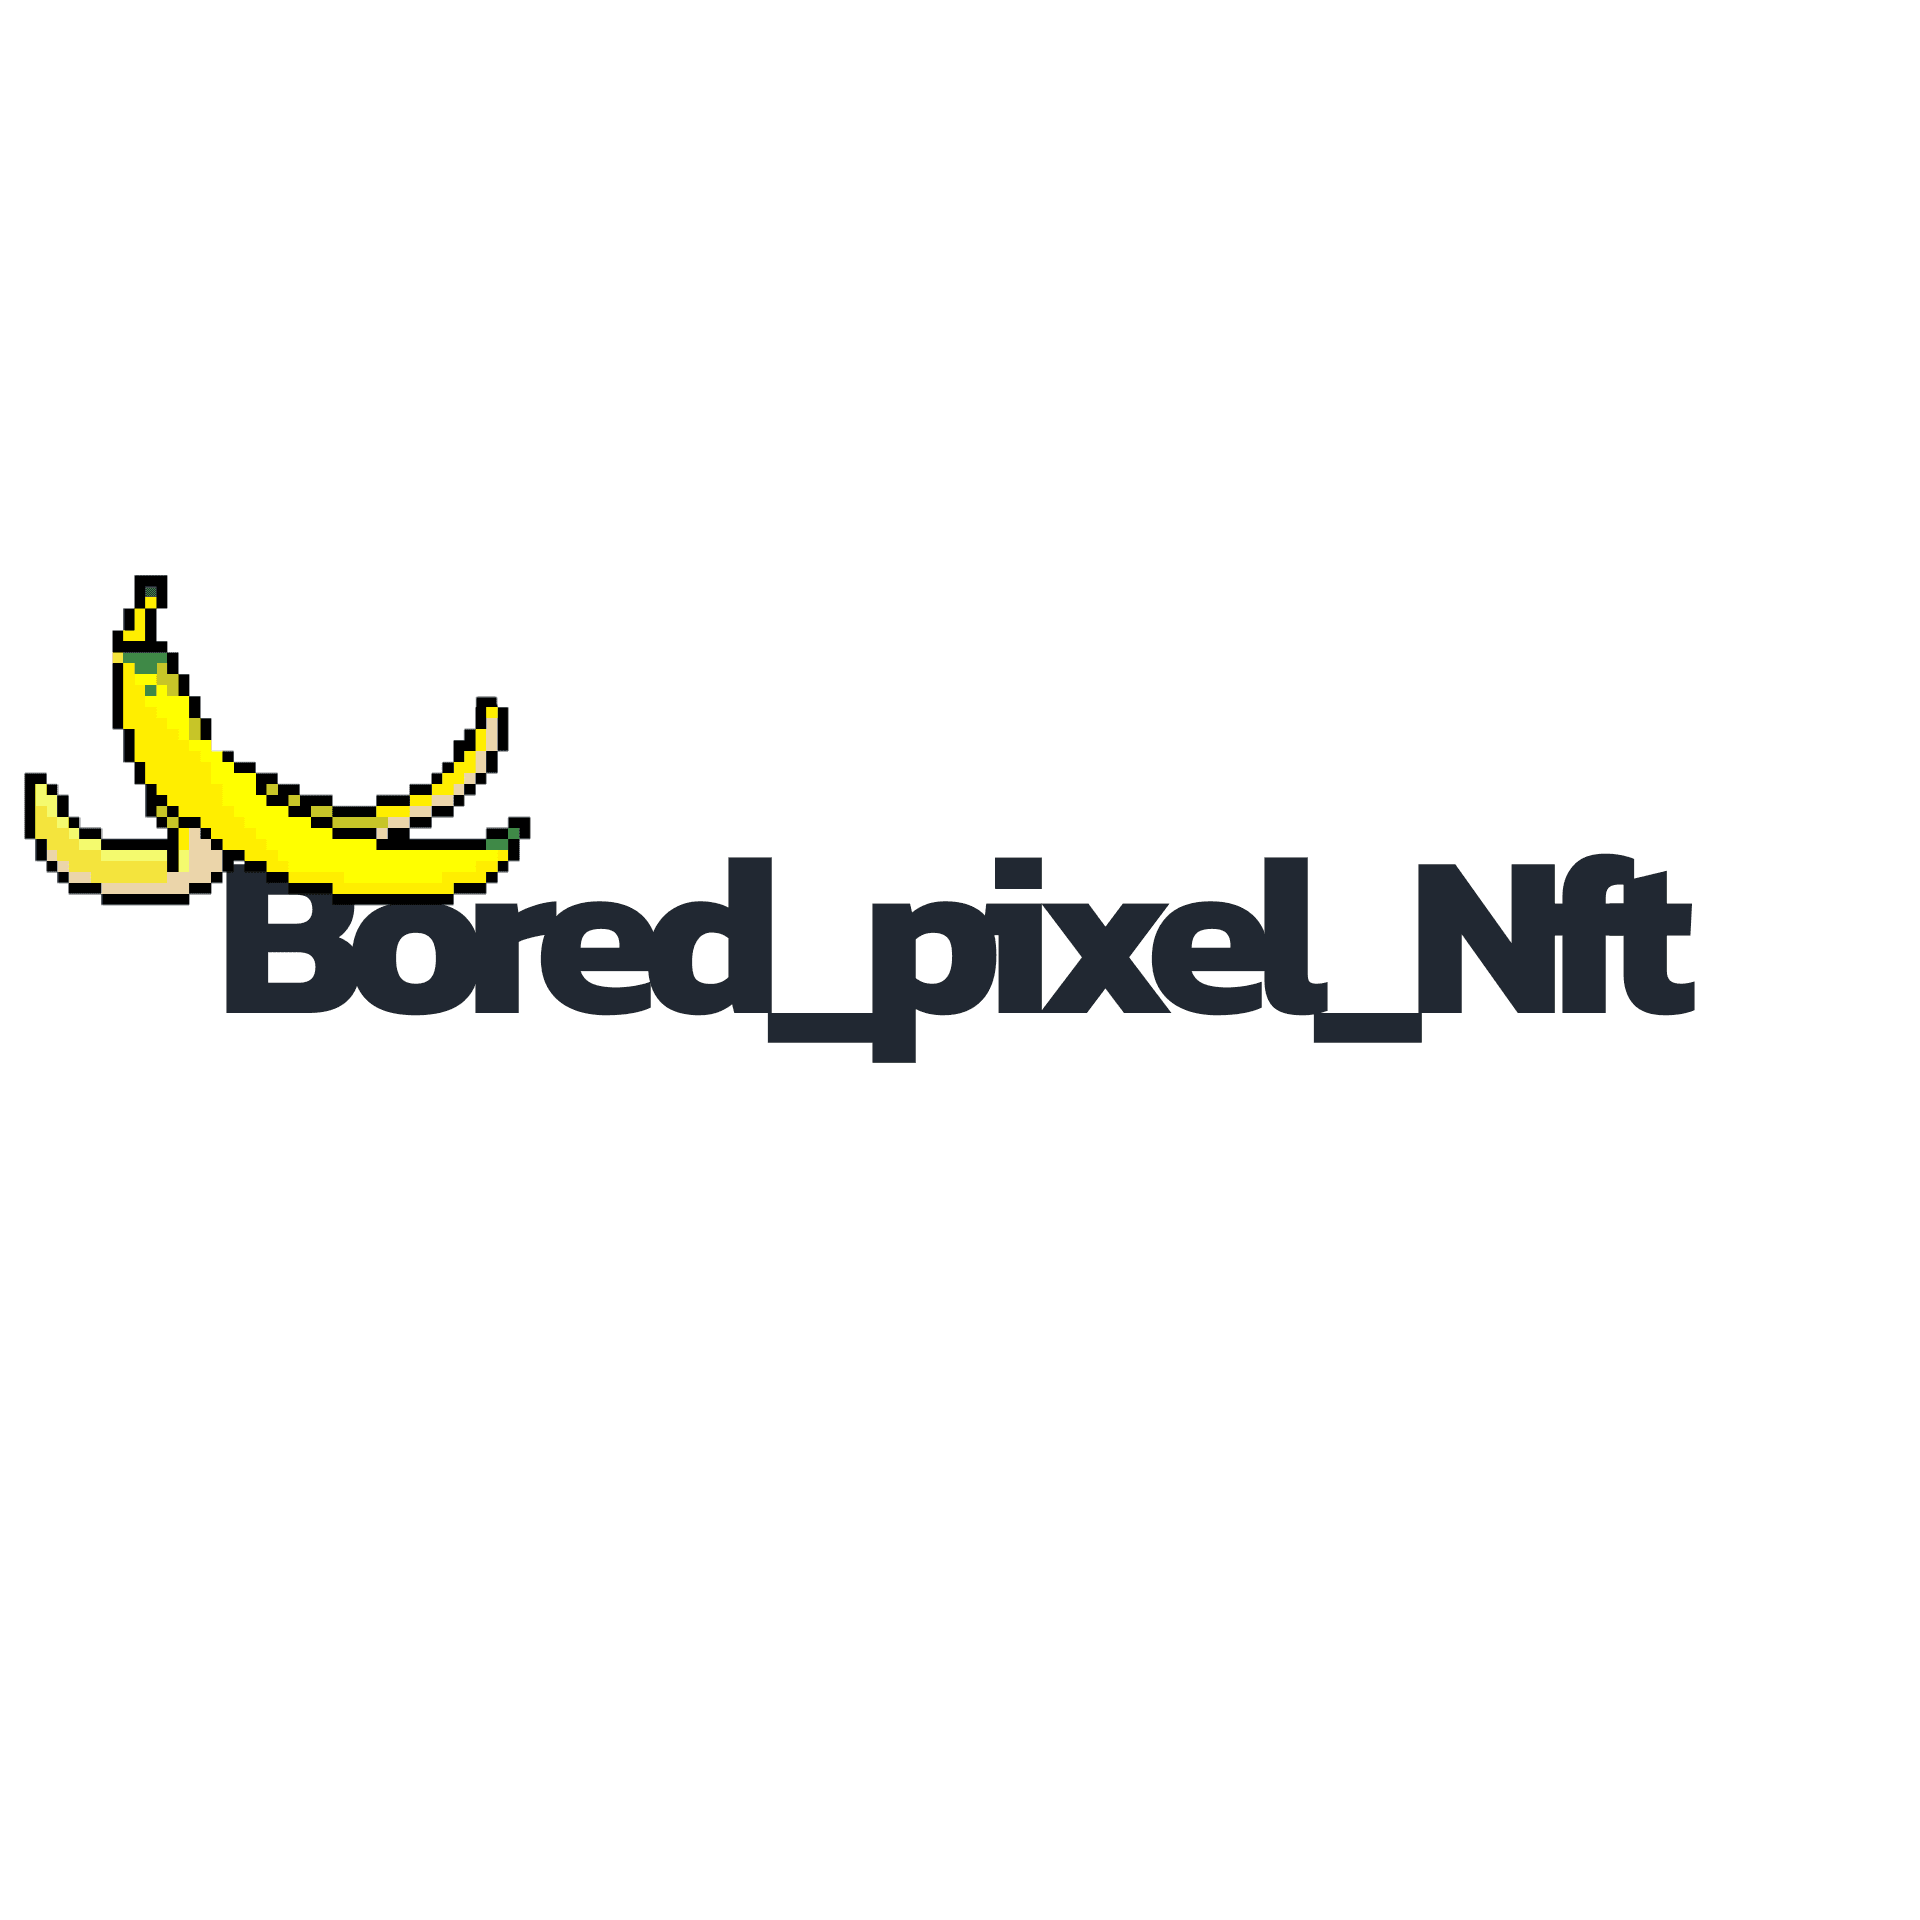 Bored_pixel_NFt banner